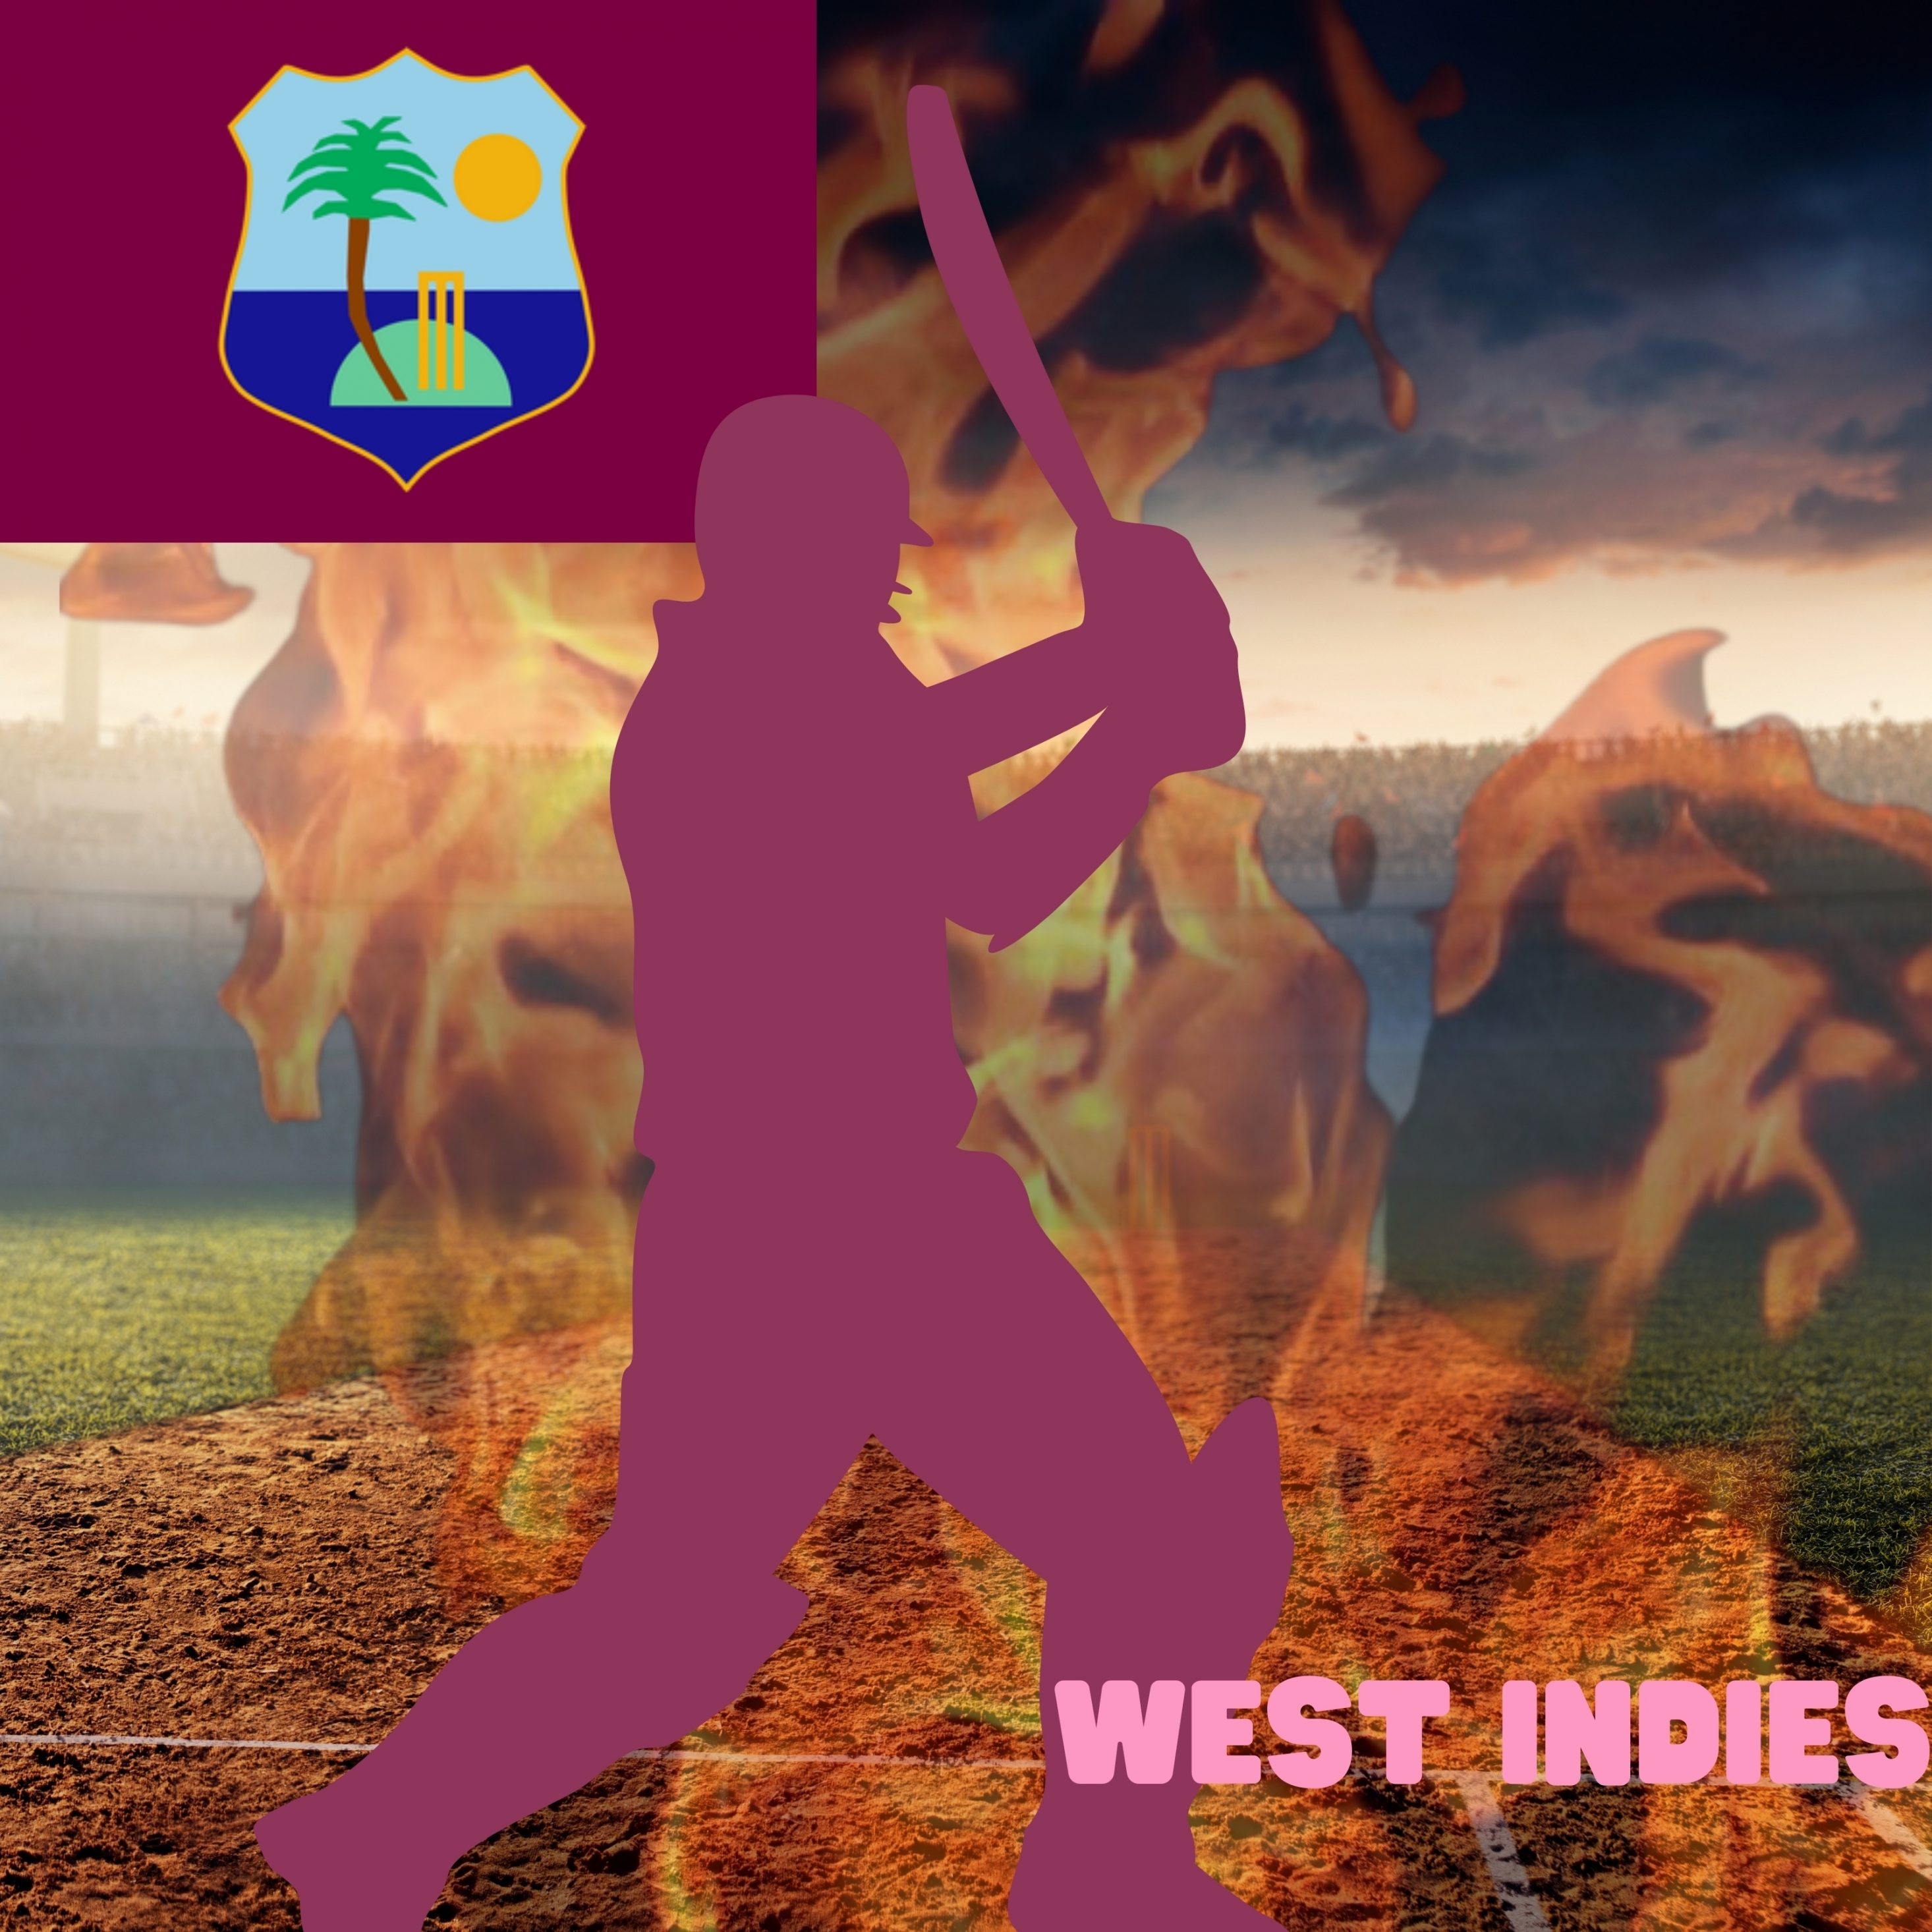 2932x2932 iPad Pro wallpaper 4k West Indies Cricket Stadium iPad Wallpaper 2932x2932 pixels resolution